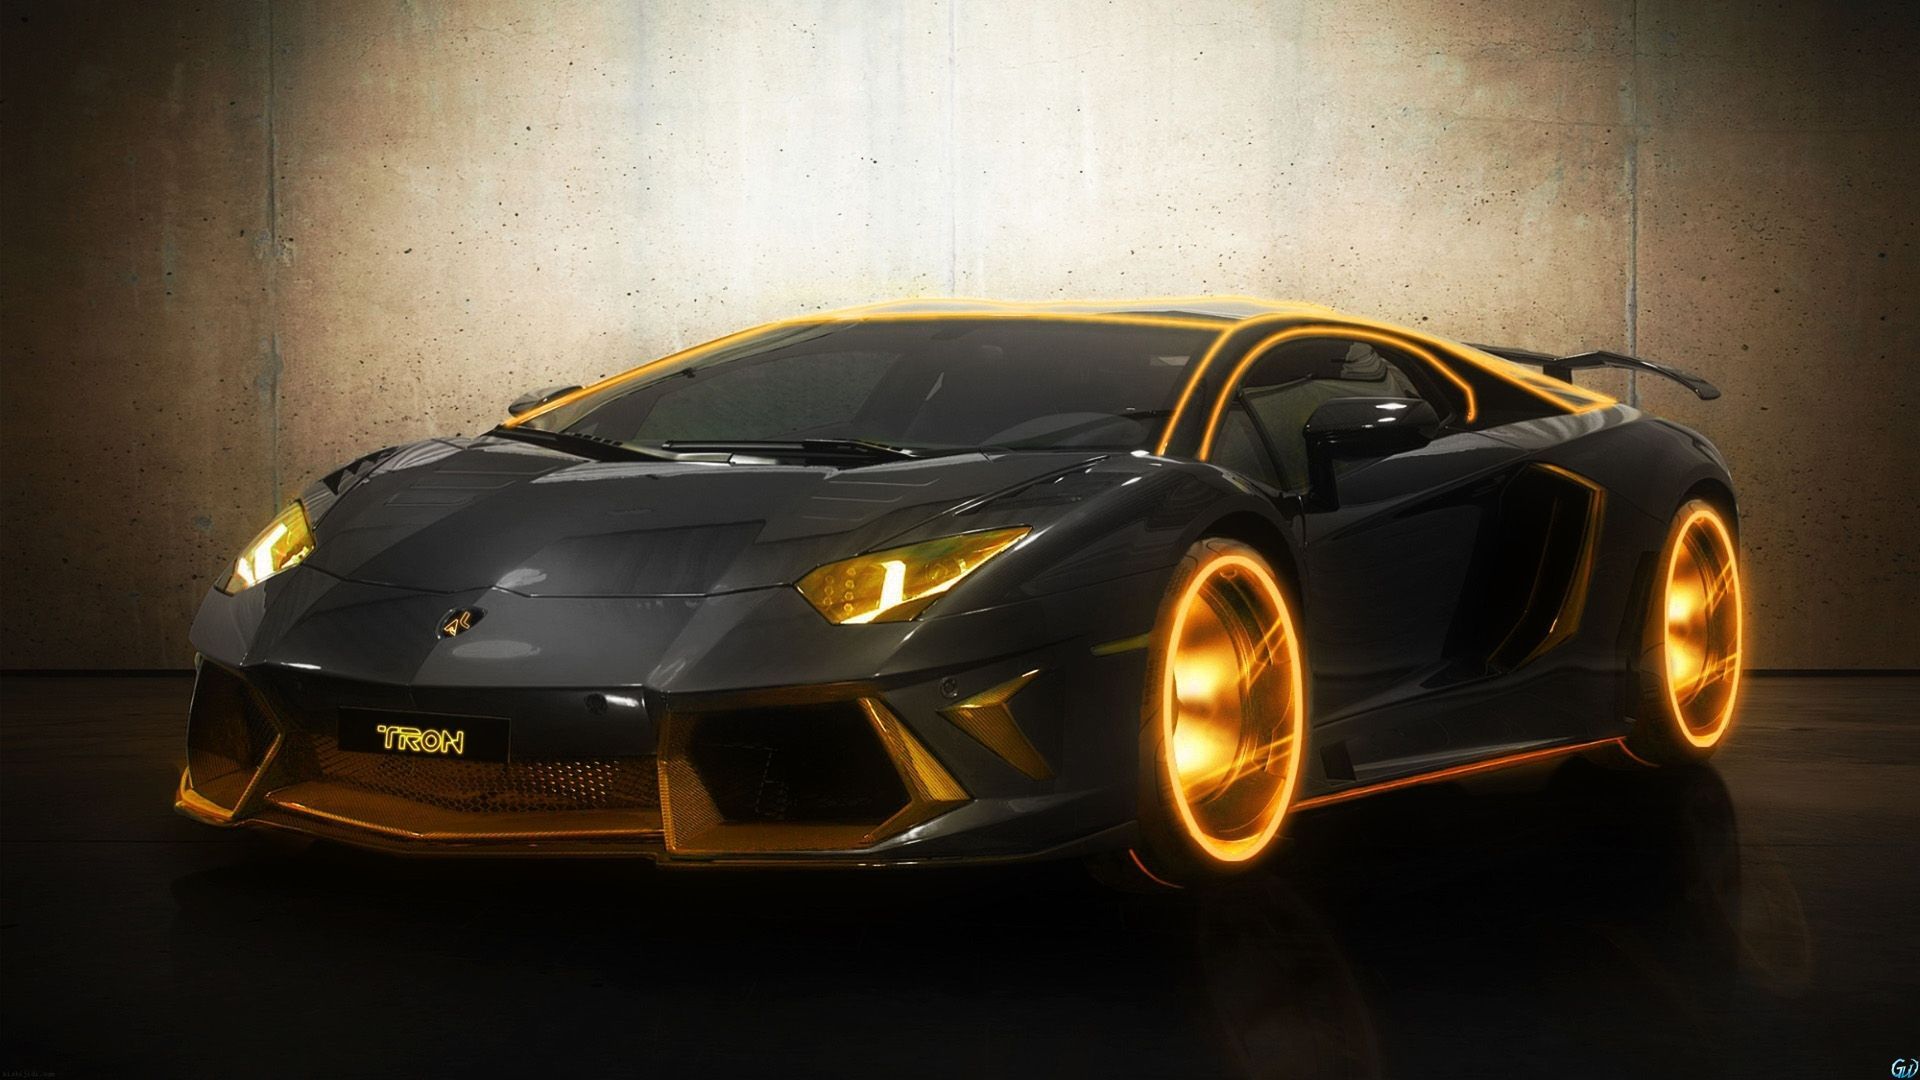 Flaming Lamborghini Reventon by leftee123 on DeviantArt